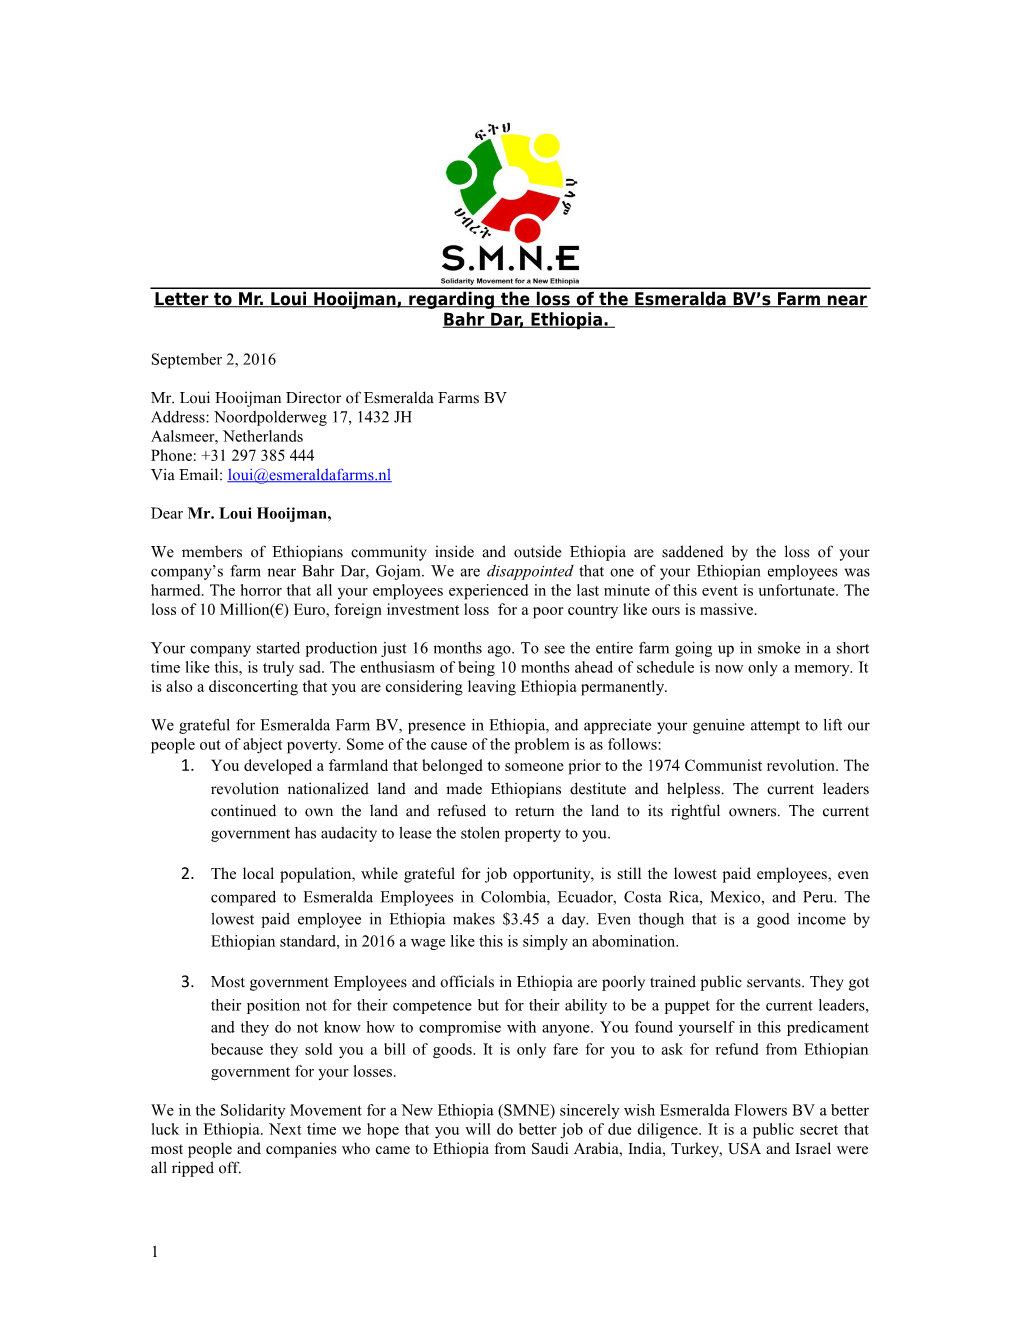 Letter to Mr. Loui Hooijman, Regarding the Loss of the Esmeralda BV S Farm Near Bahr Dar